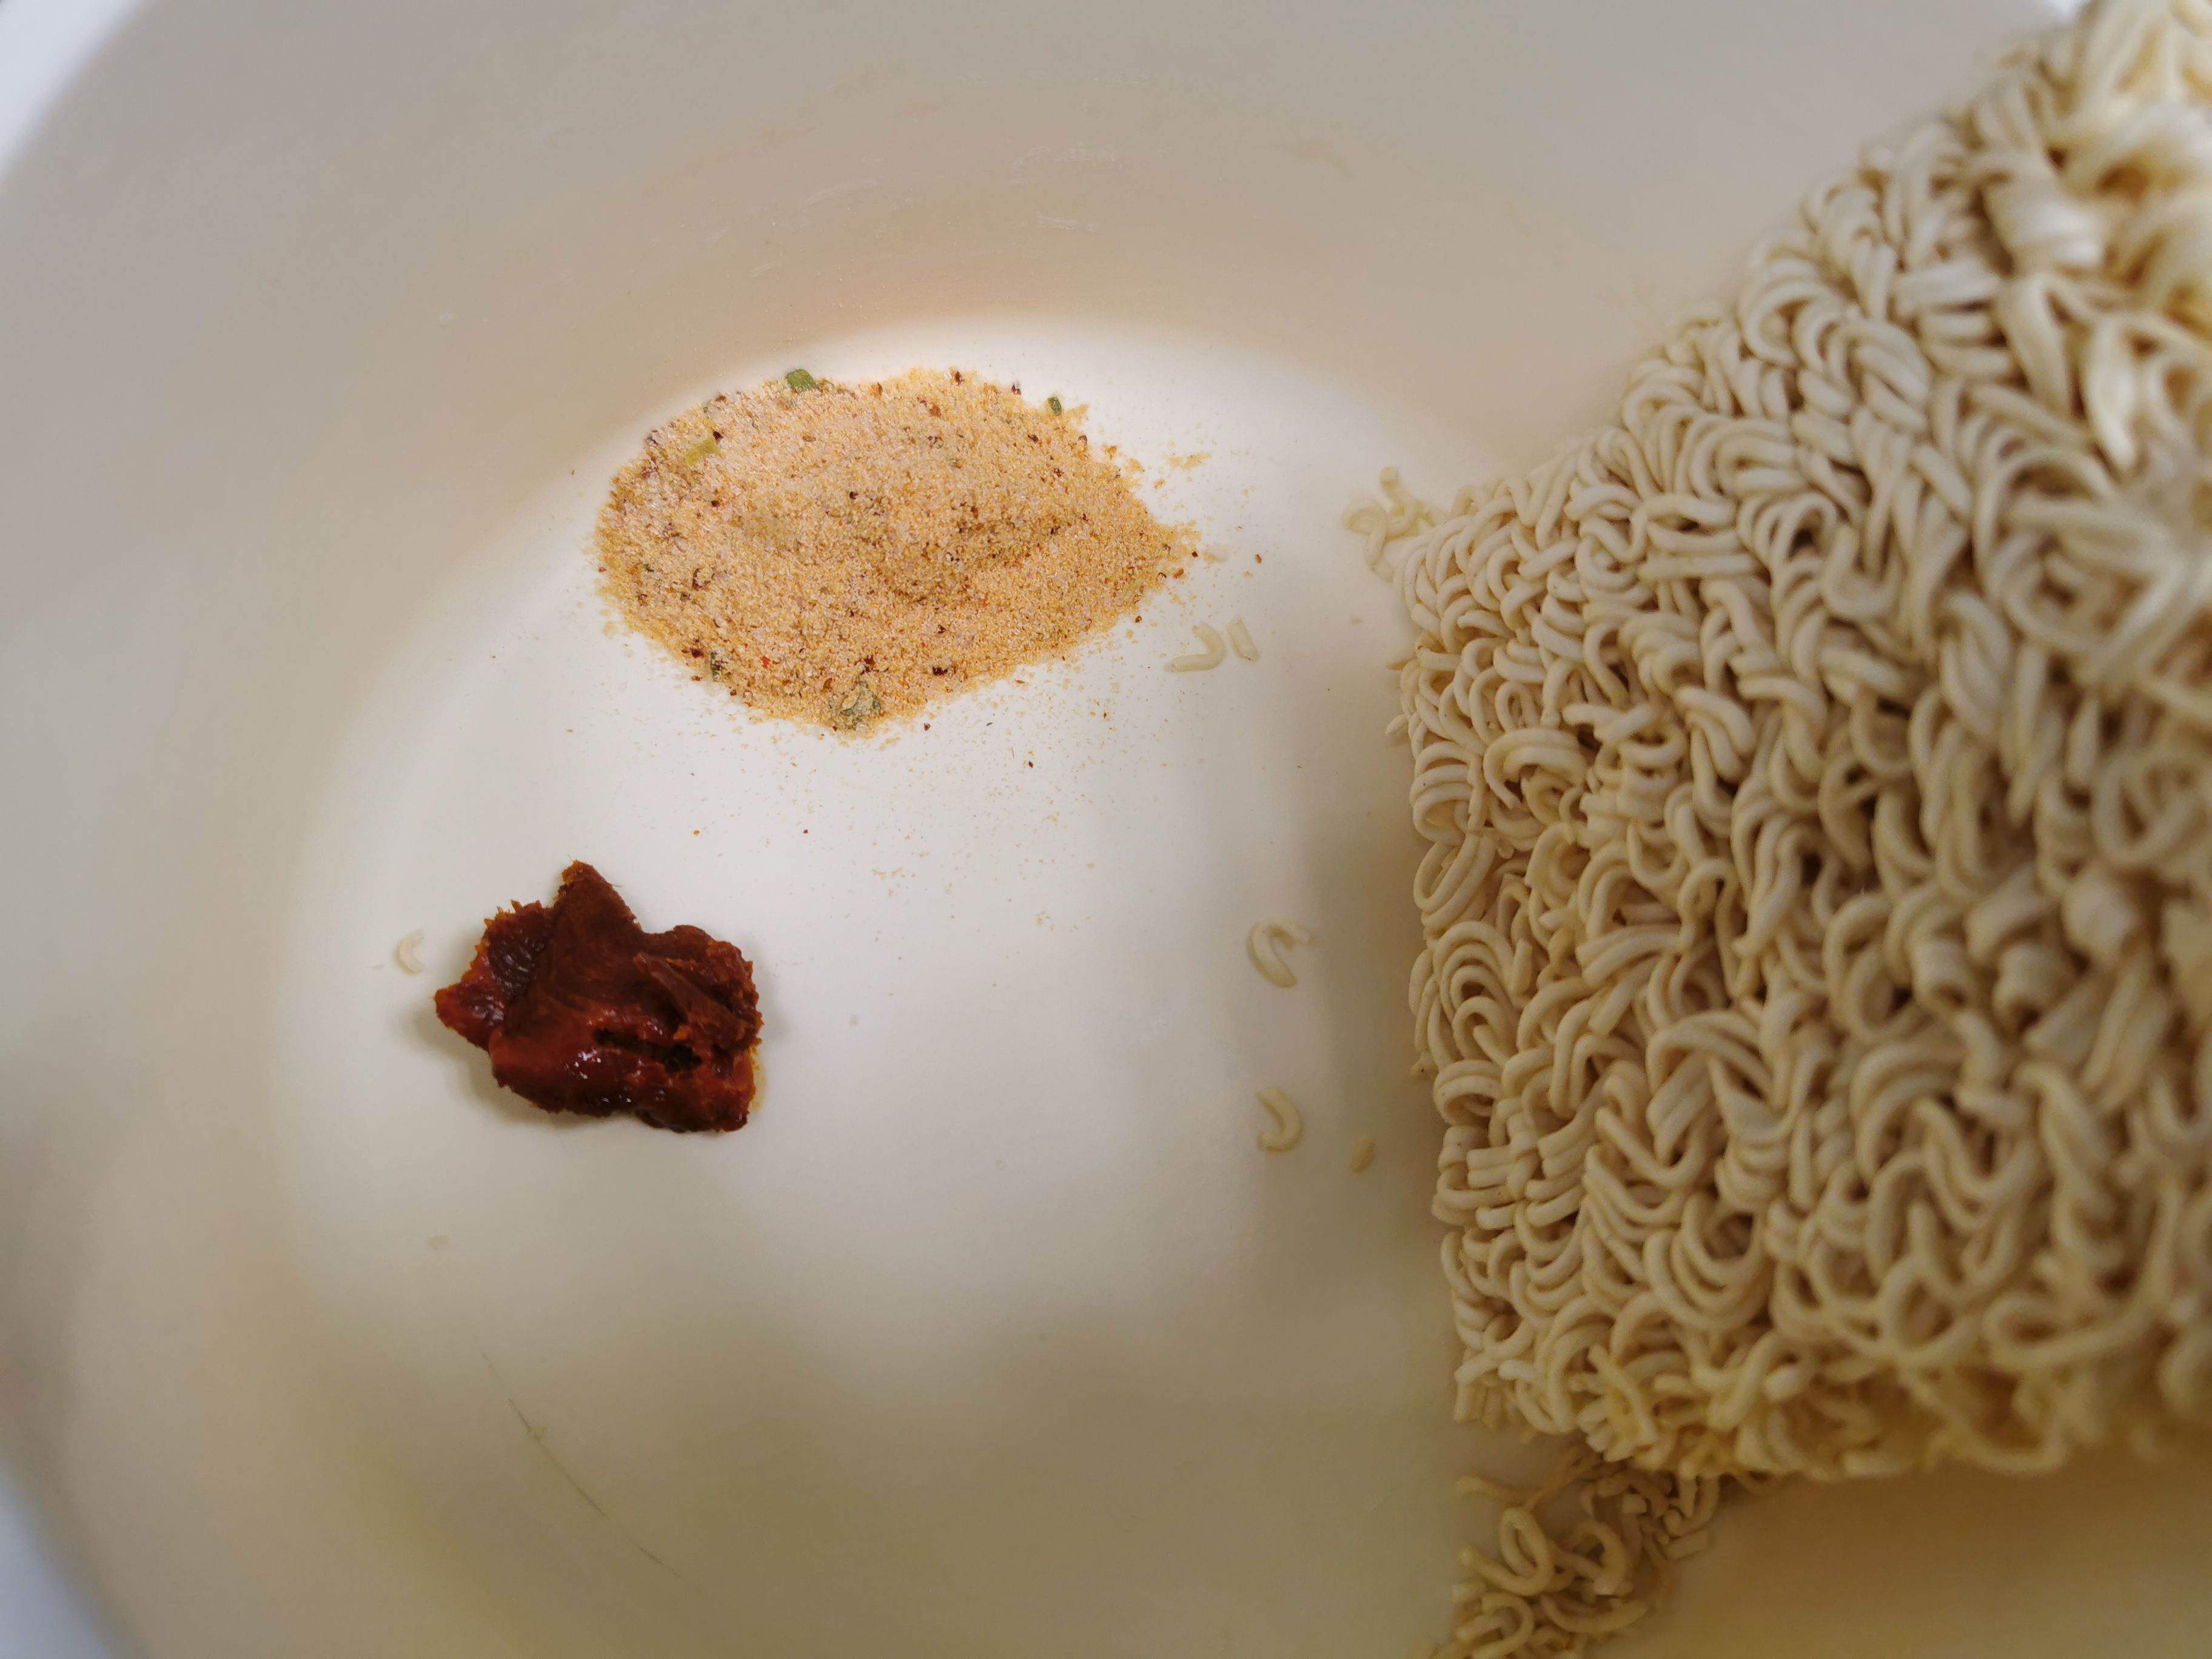 #2450: Asia Gold "Instant Noodles Shrimps-Geschmack"